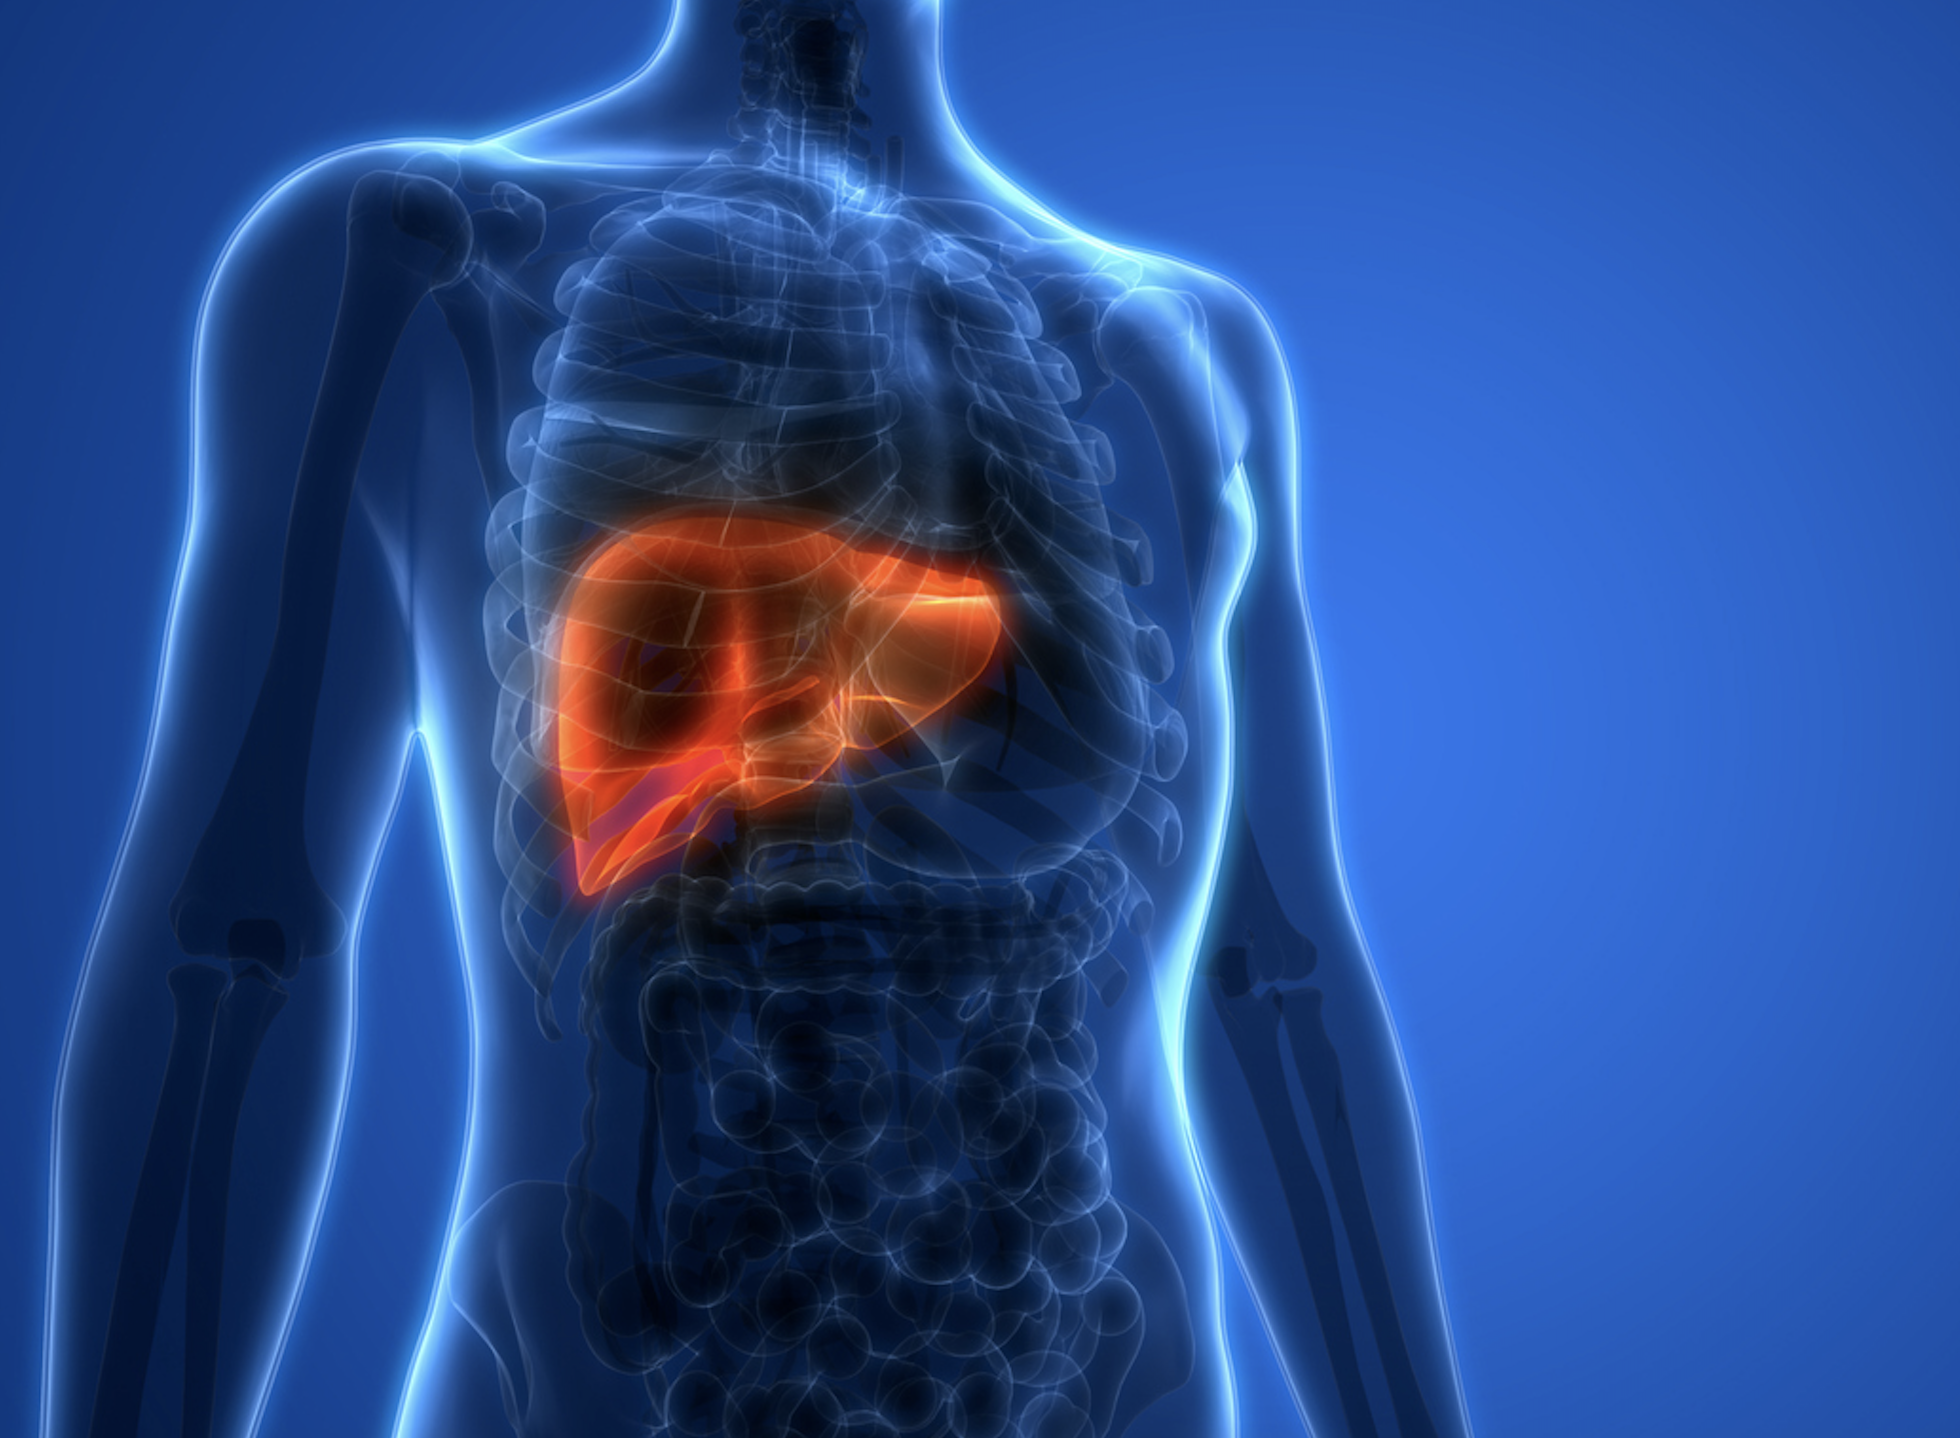 Fatty Liver Disease Treatment in Dubai